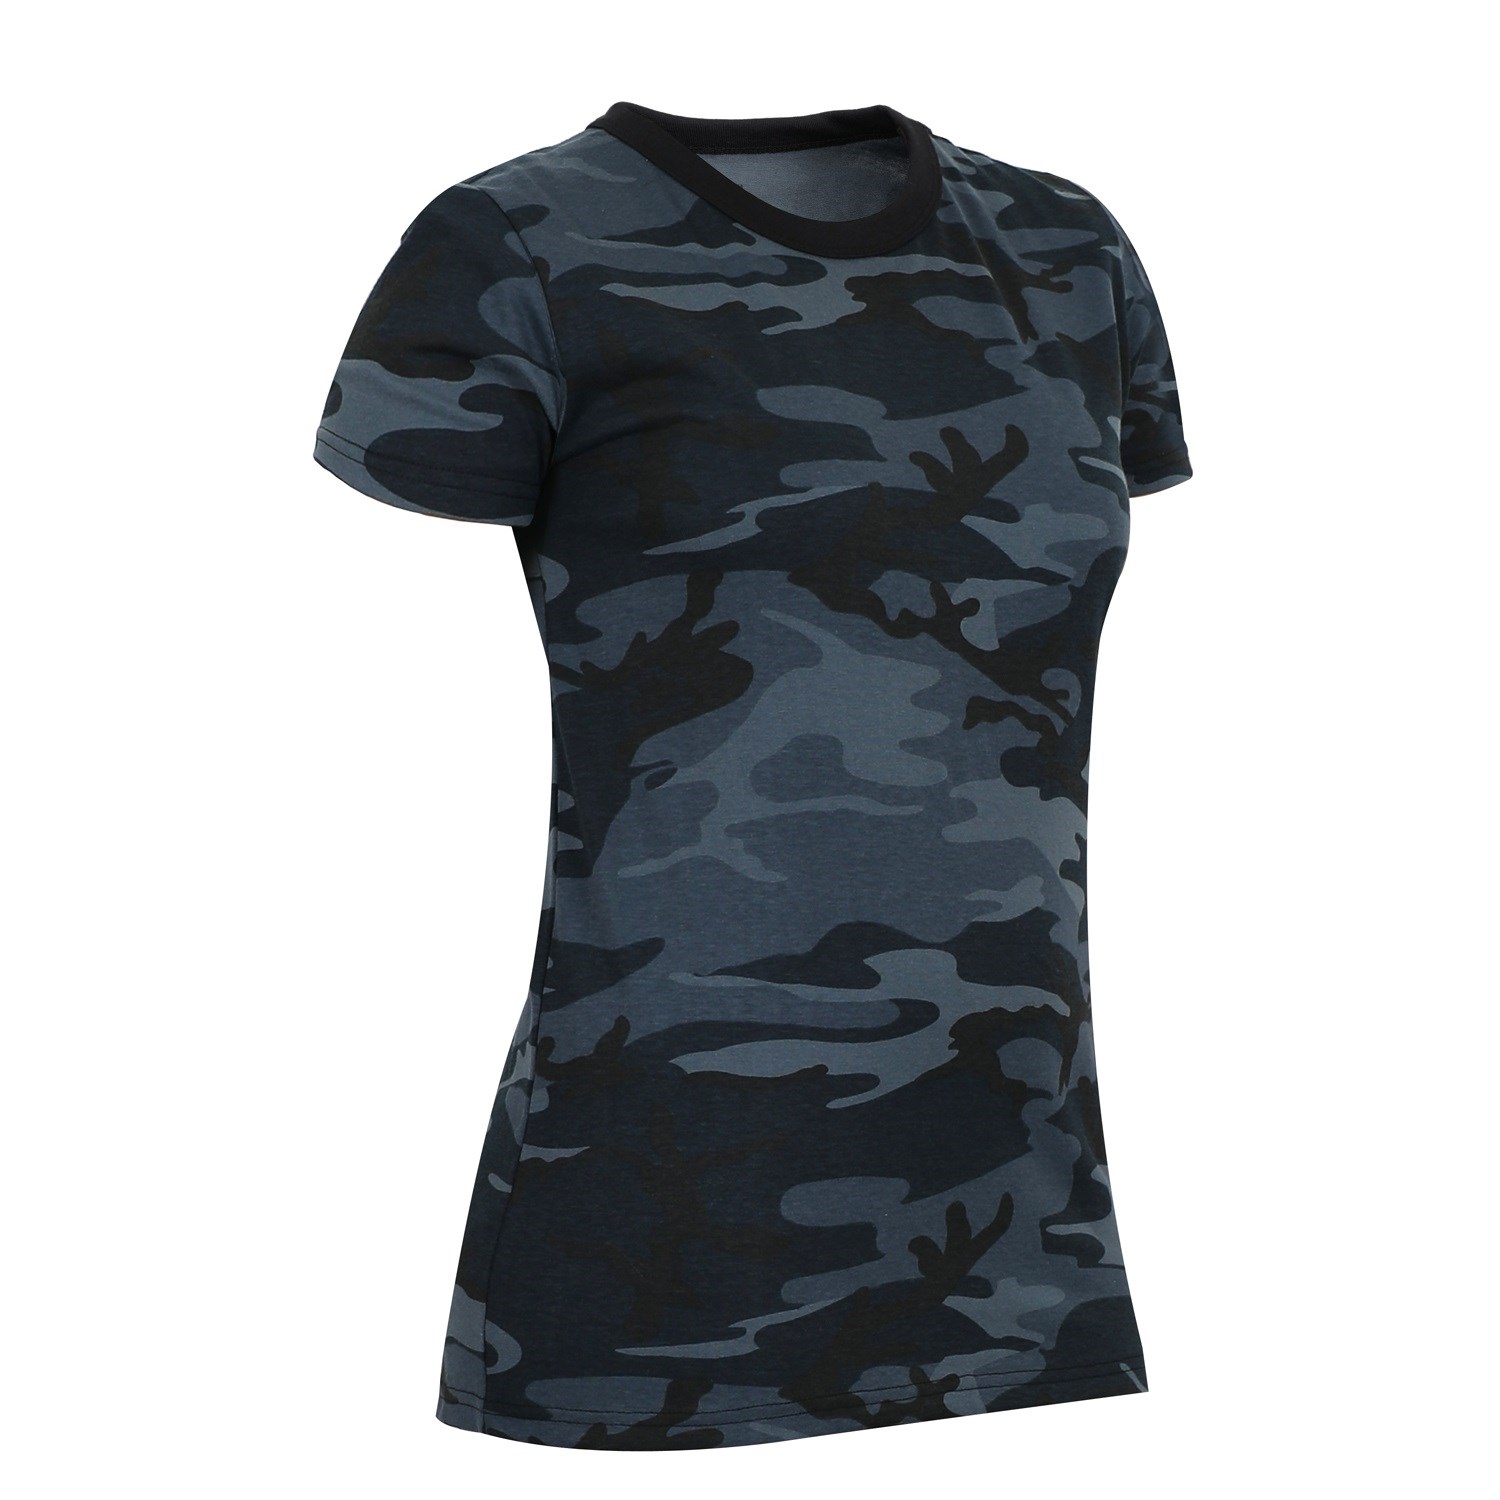 womens camo tank top shirt woodland rothco 4476 various sizes 